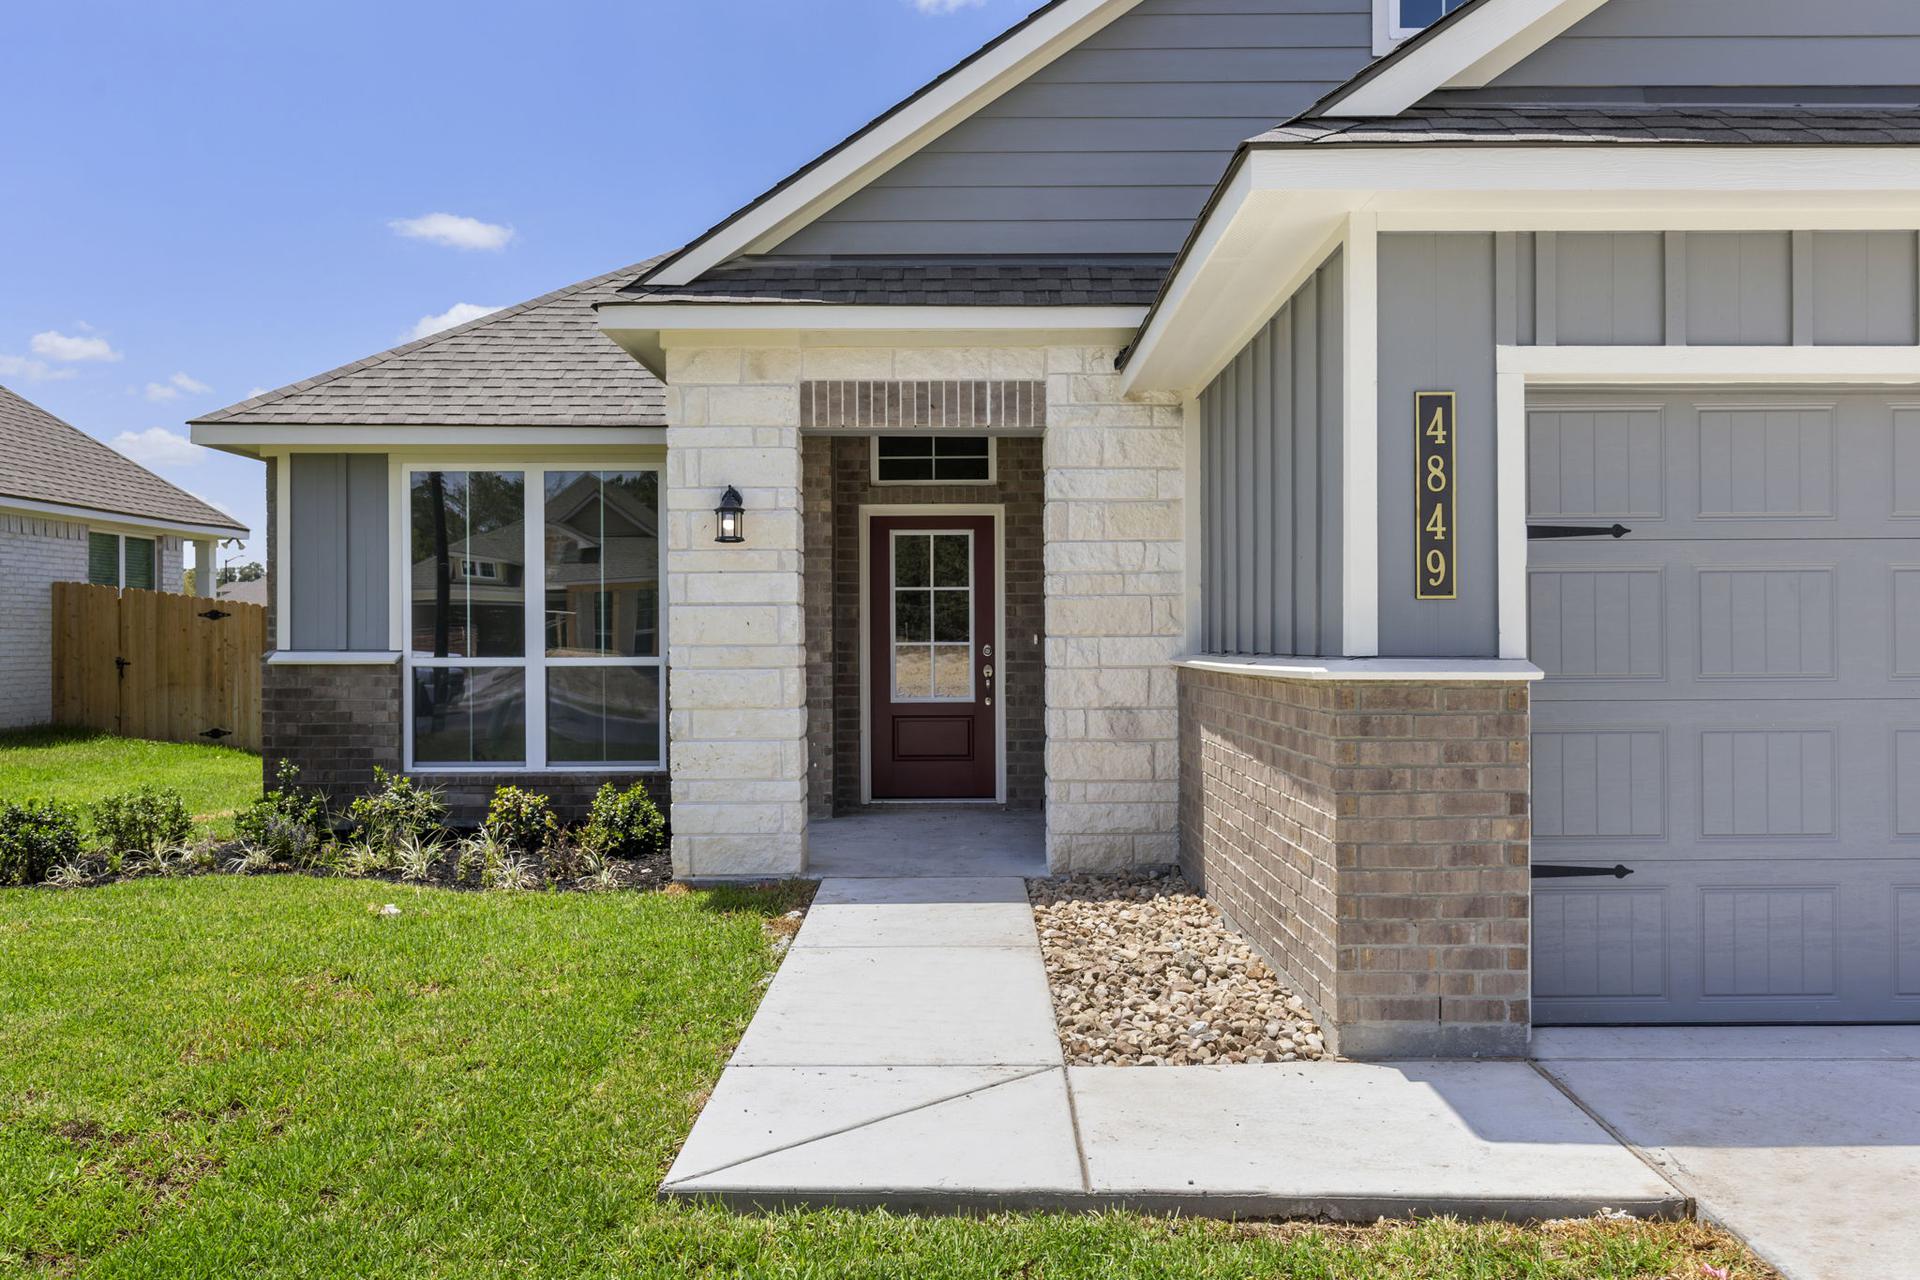 1,800sf New Home in Bryan, TX